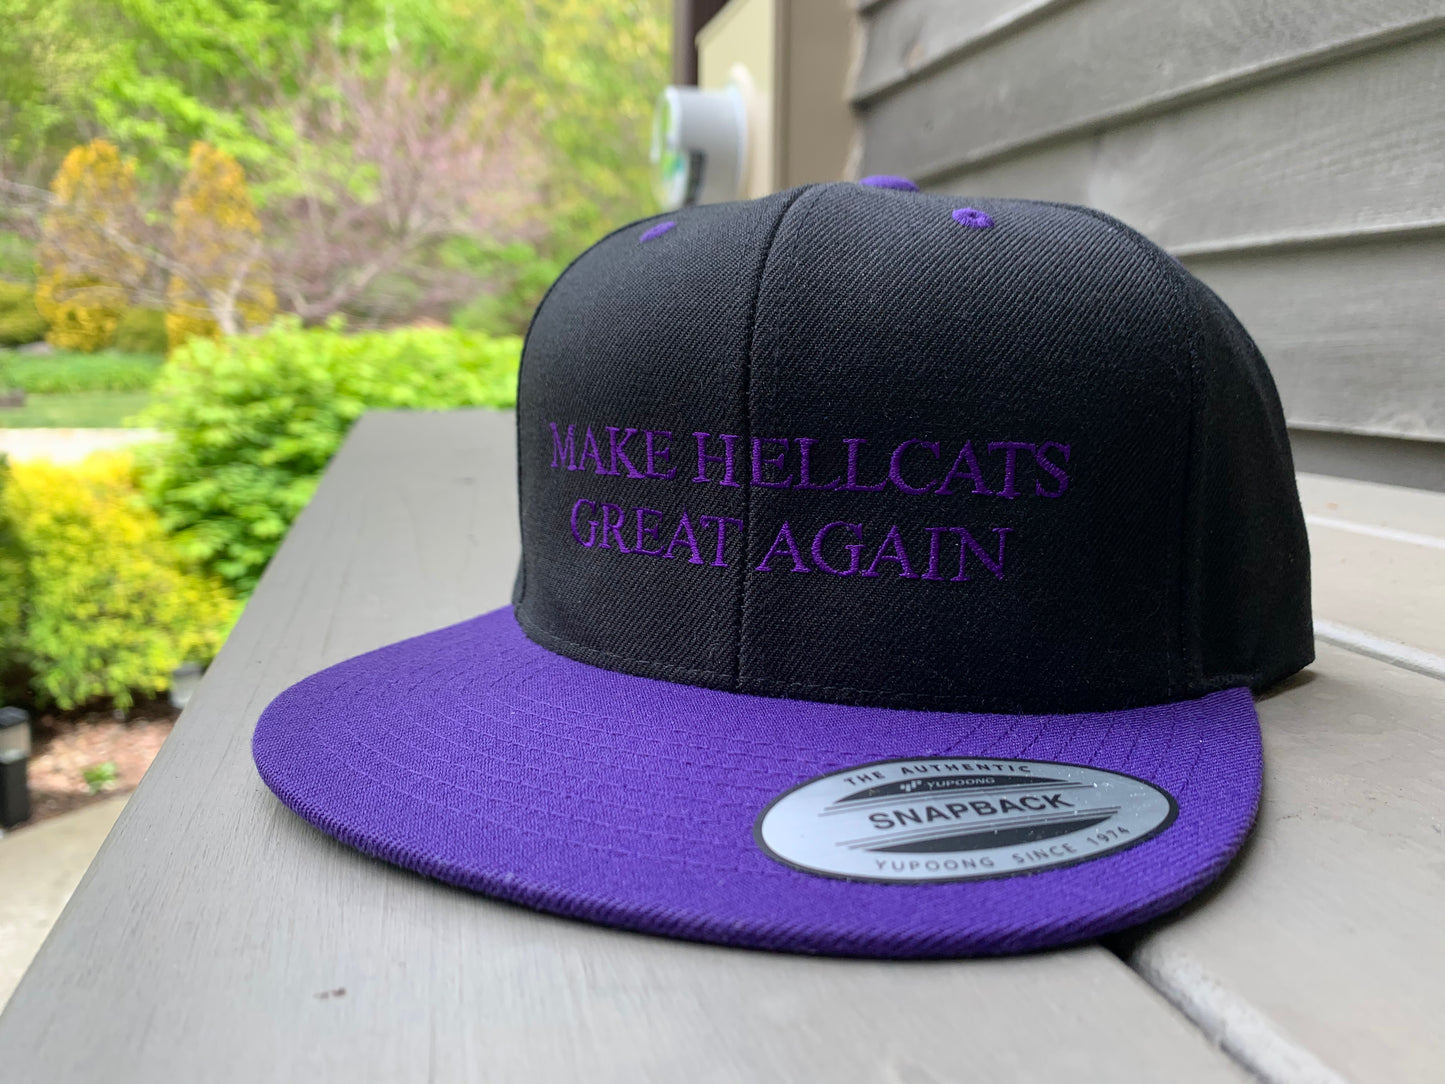 Make Hellcats Great Again Snapback (Black/Purple)